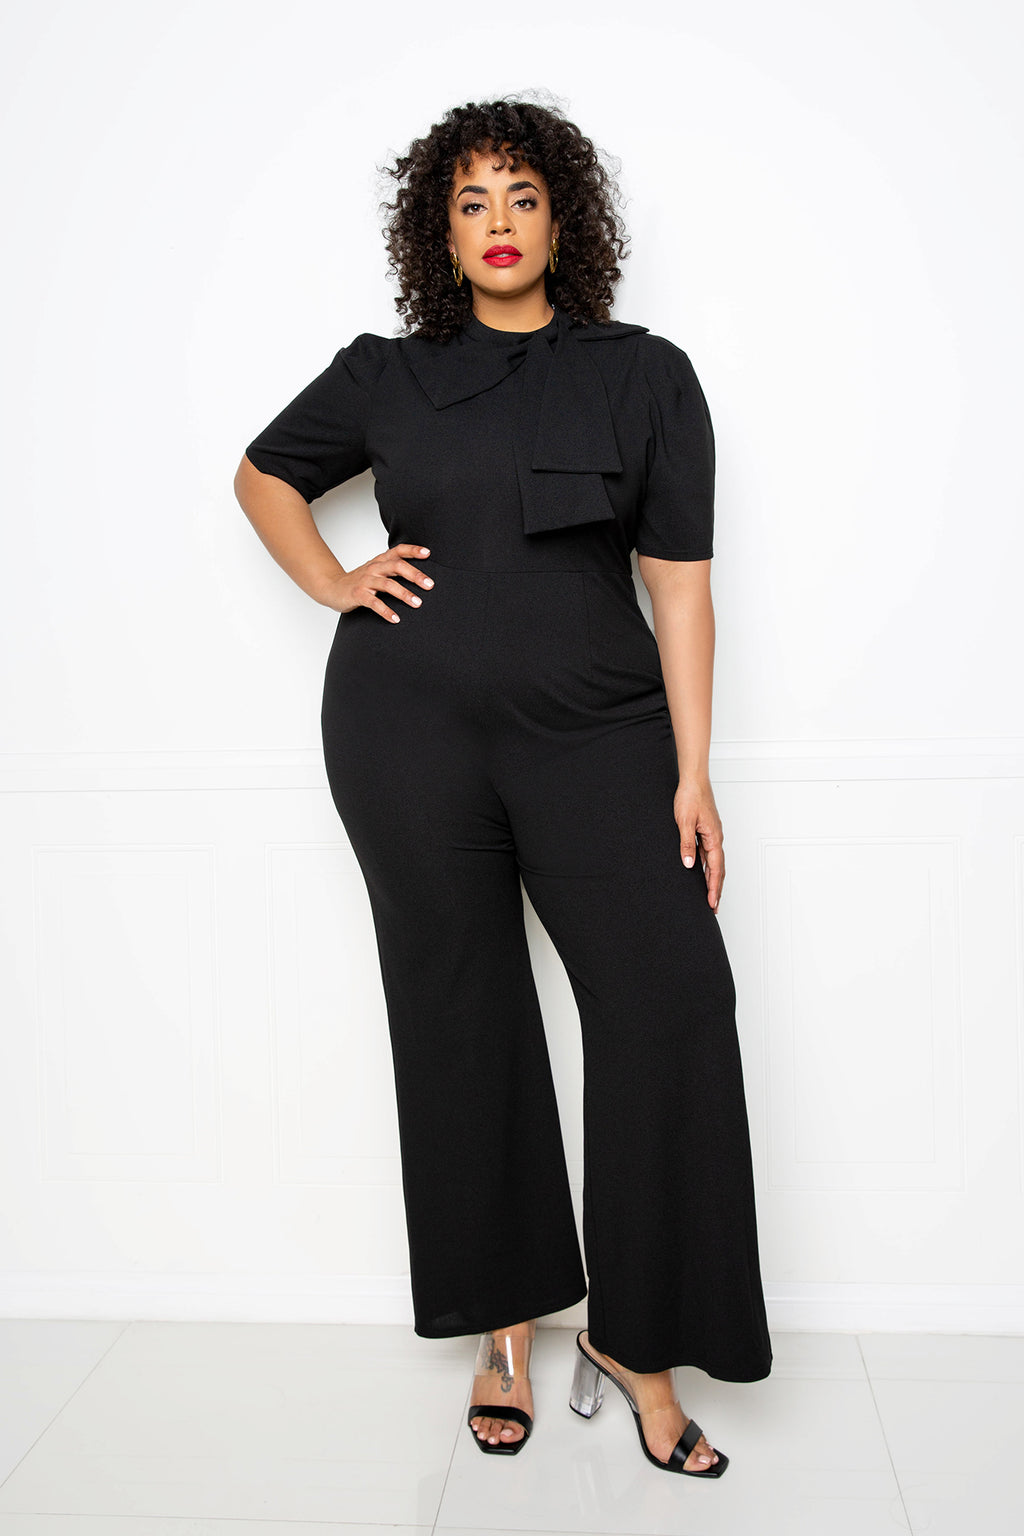  Black Jumpsuit for Women - Sexy One Shoulder High Waist Wide  Leg Pants Plus Size Long Romper Black Large : Clothing, Shoes & Jewelry